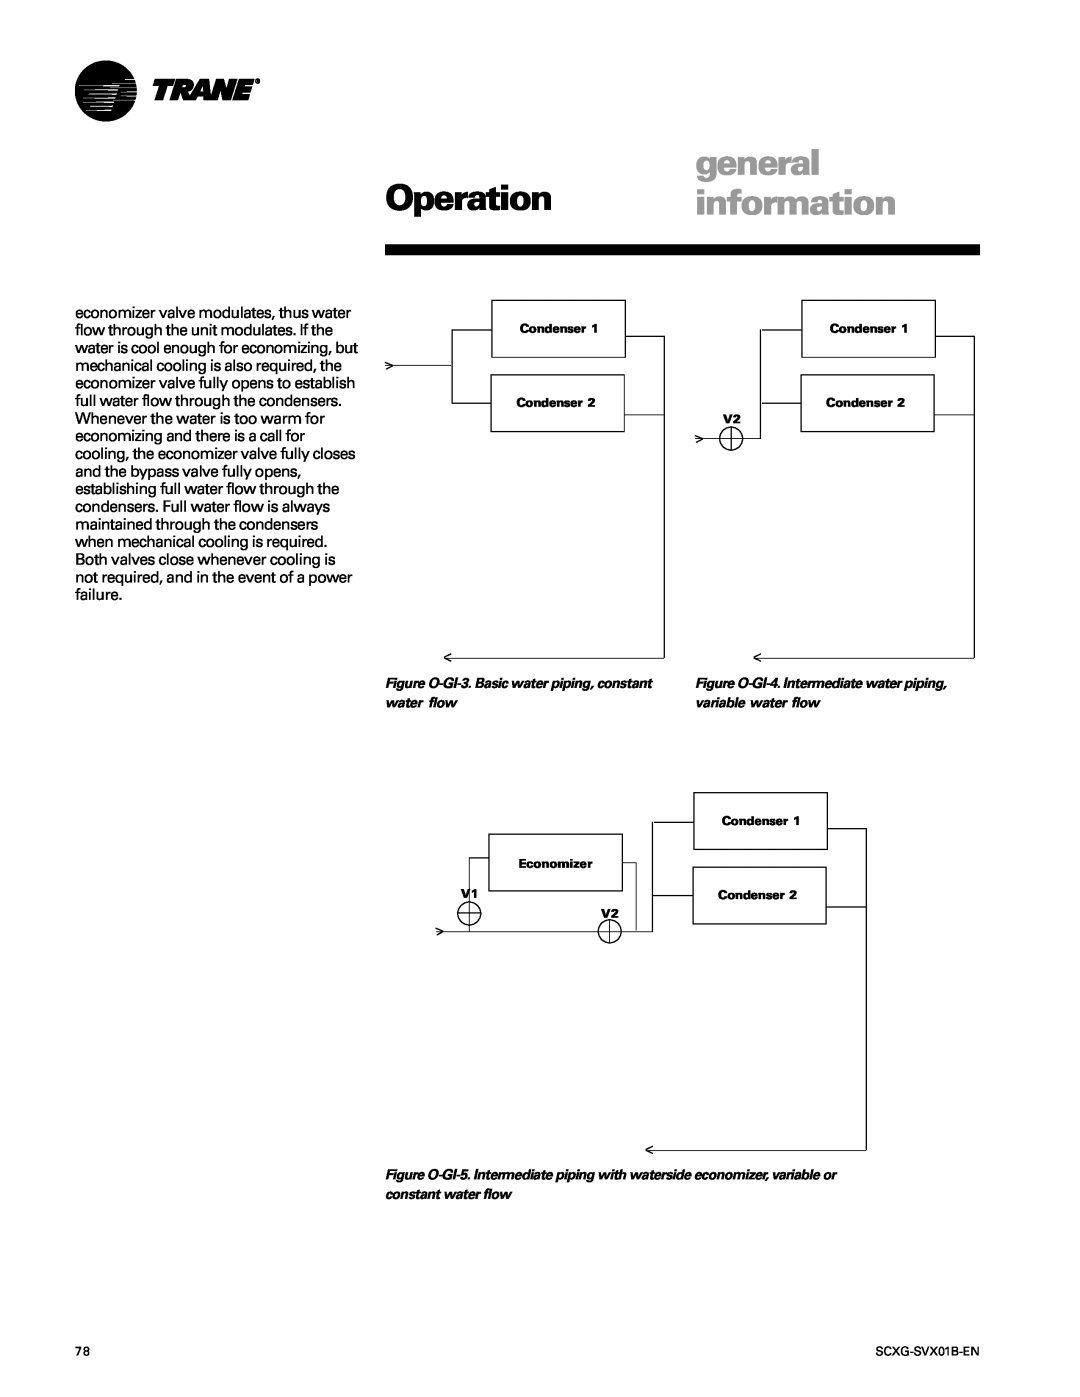 Trane SCXG-SVX01B-EN manual general Operation information, Condenser Condenser, Economizer V2 